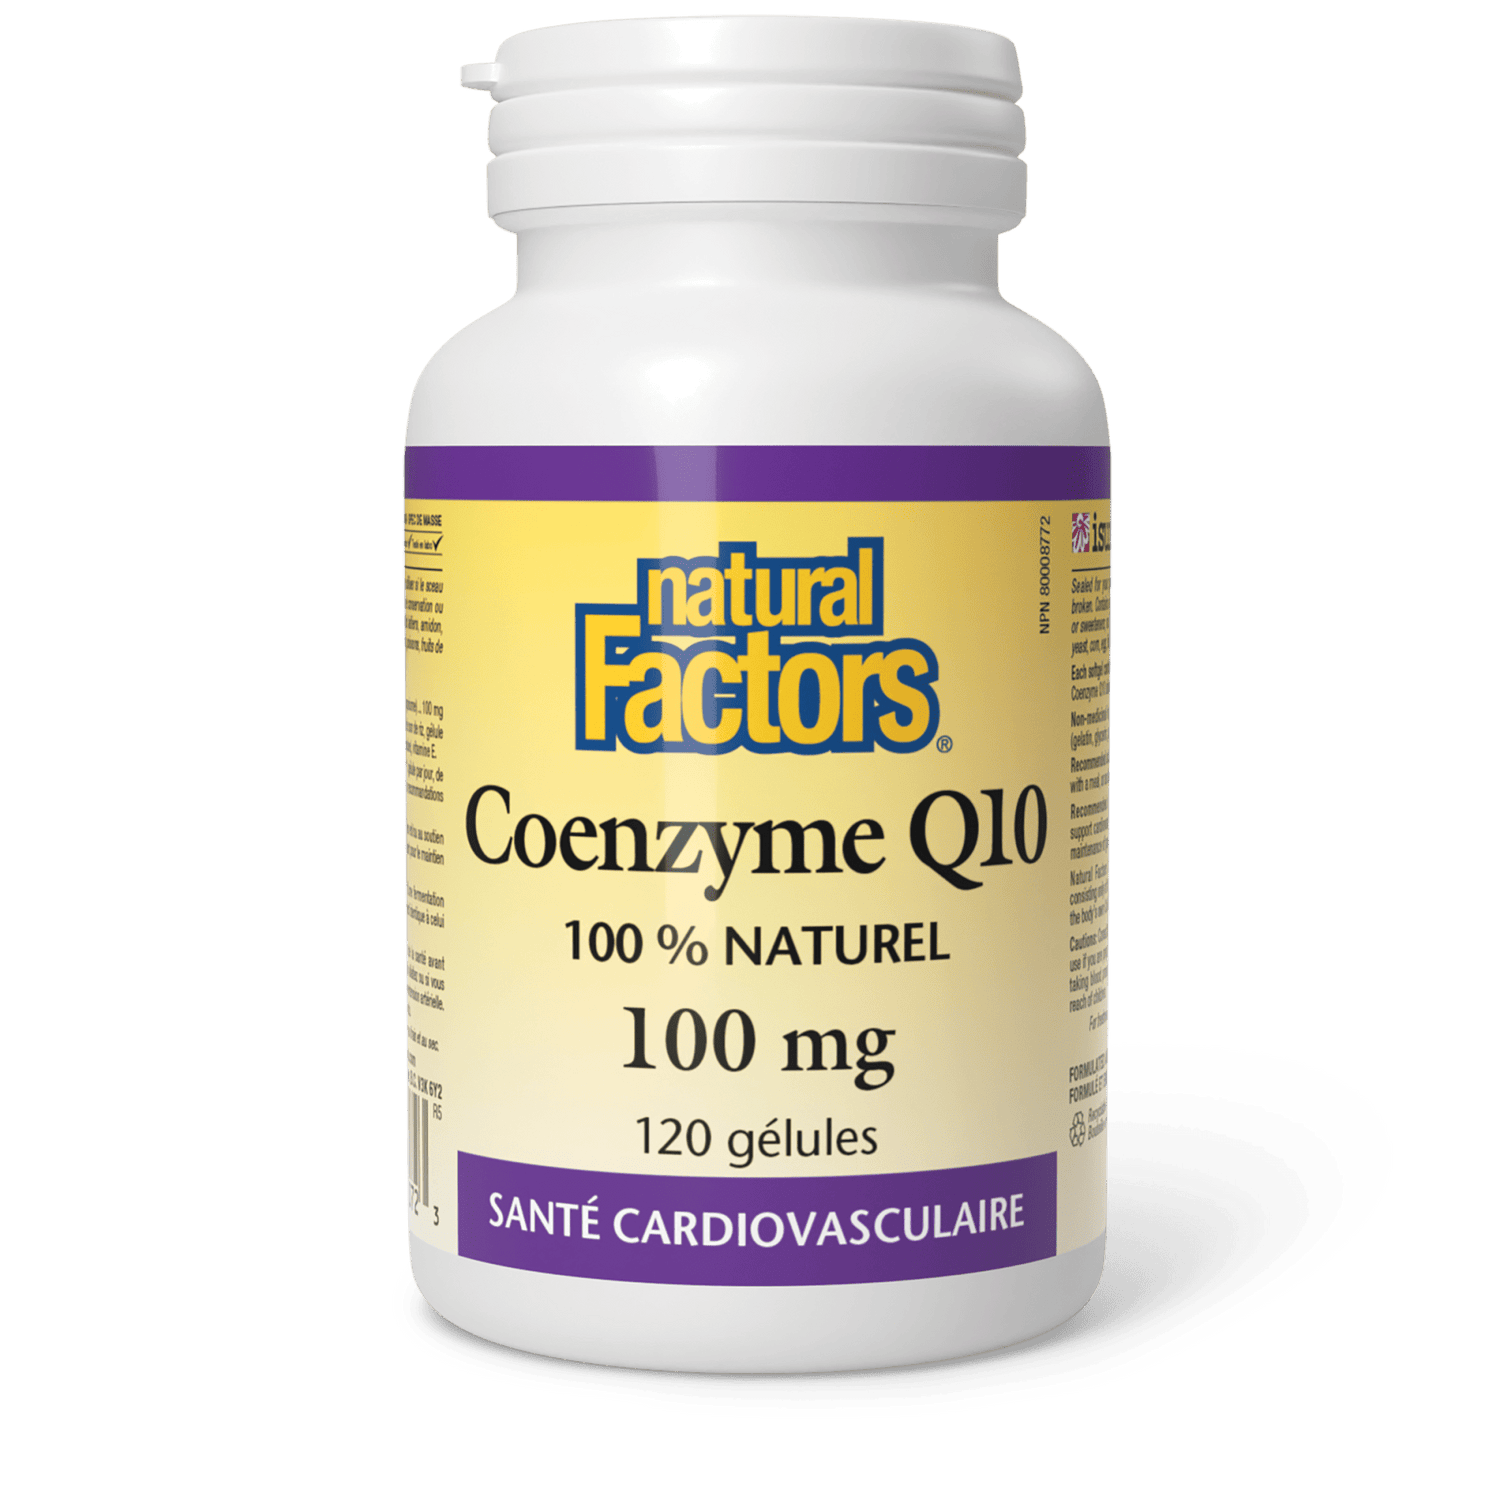 Coenzyme Q10 100 % naturel 100 mg, Natural Factors|v|image|2072